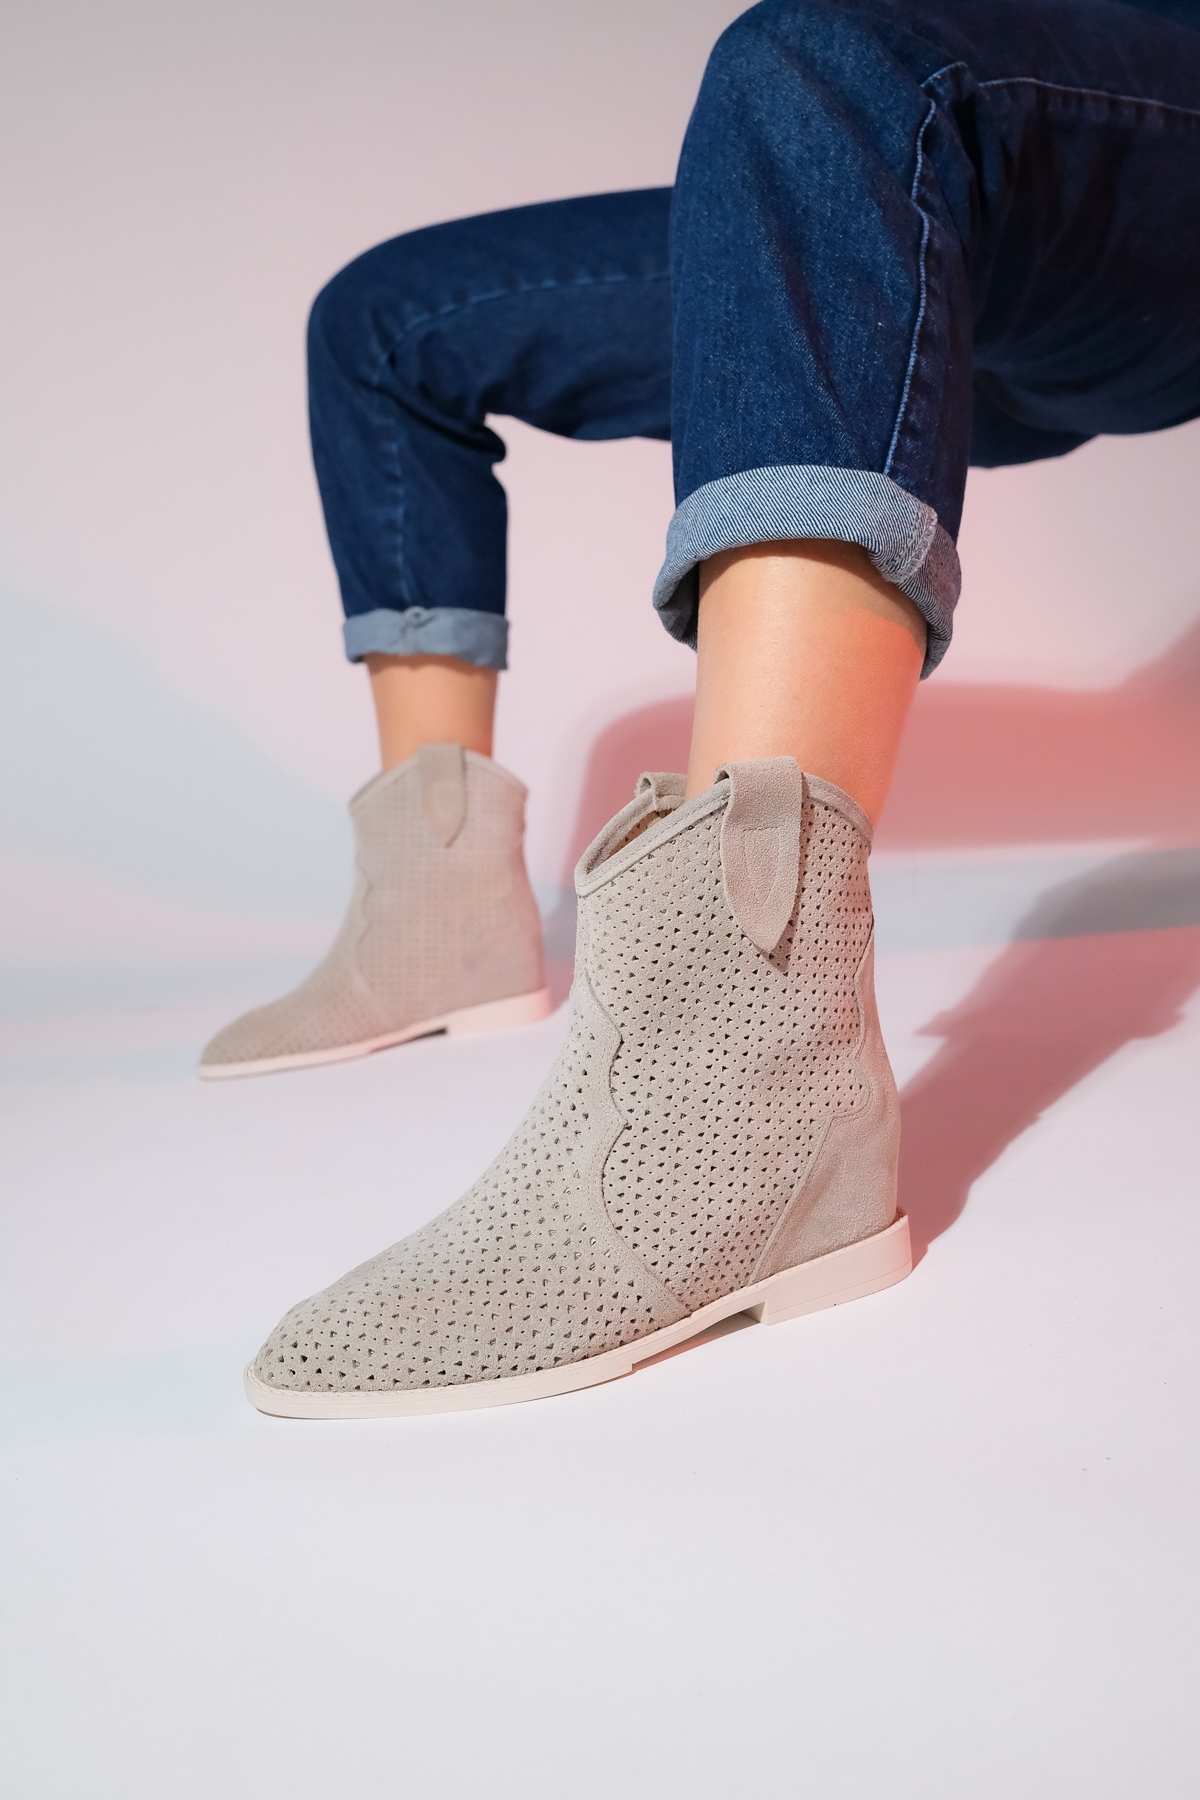 LuviShoes LOIVOS Women's Beige Suede Genuine Leather Perforated Hidden Heel Summer Boots